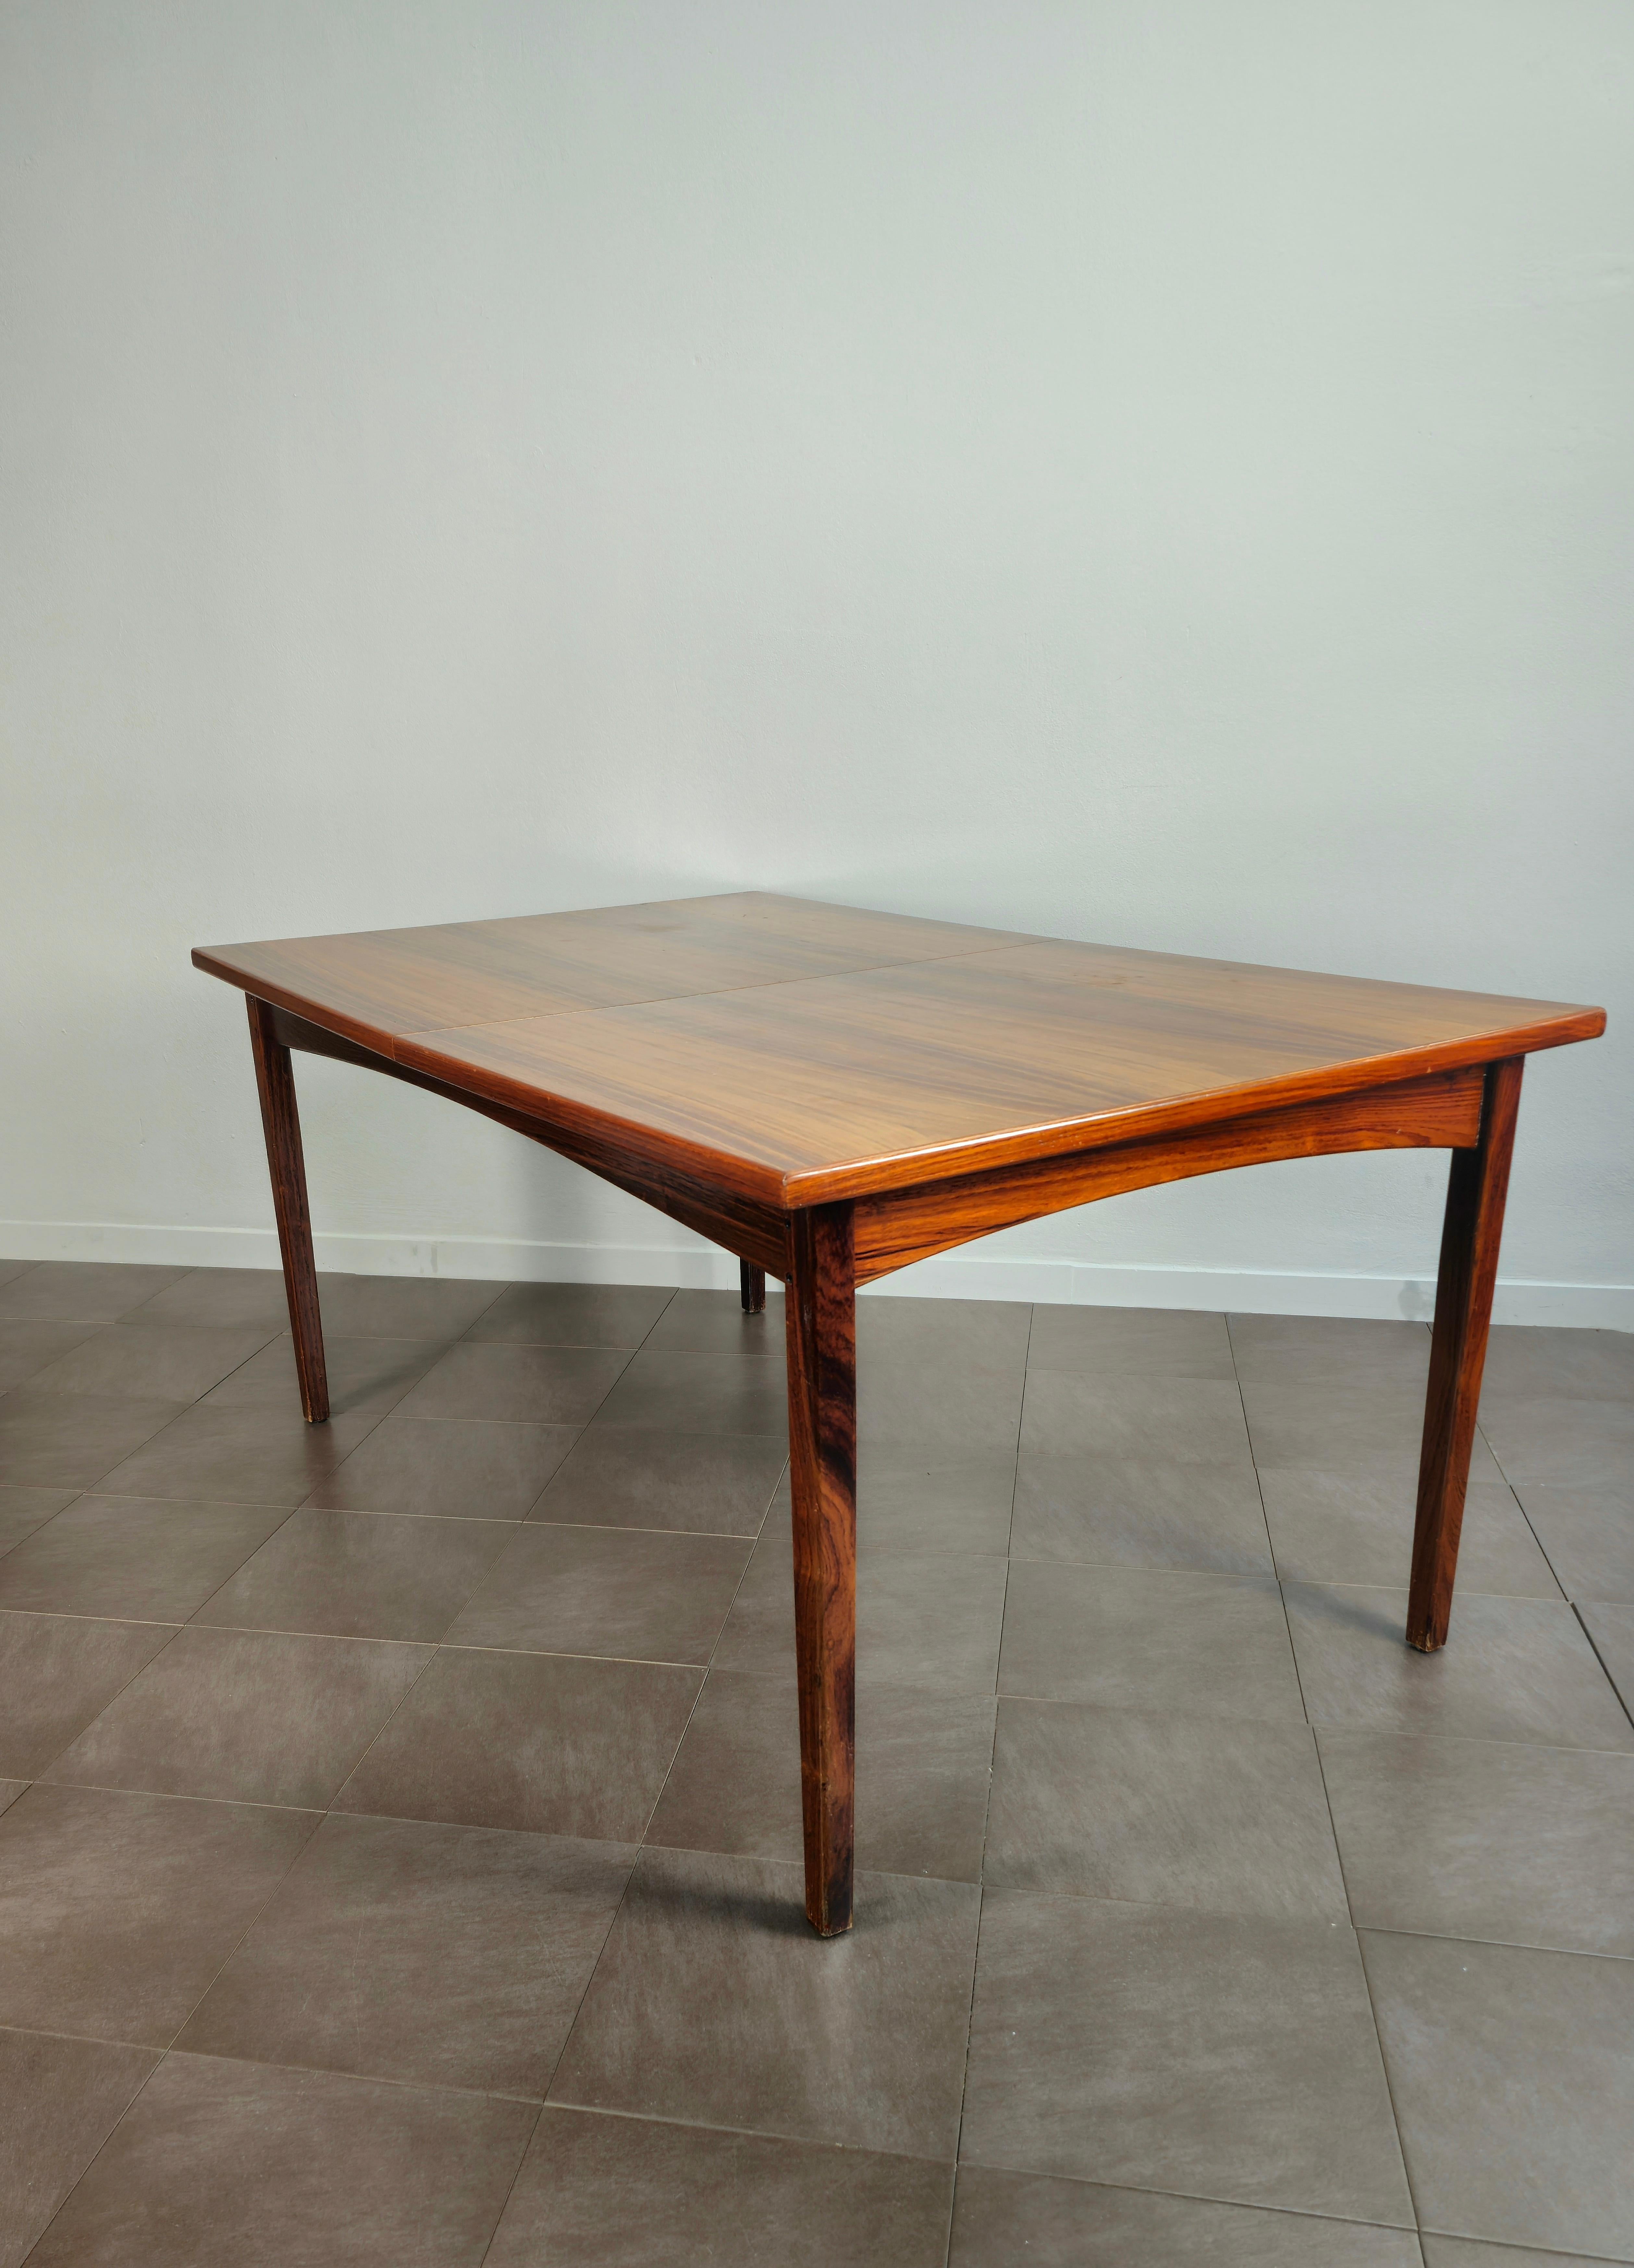 Danish Wood Dining Room Table Extendable Large Rectangular Midcentury, Denmark, 1960s For Sale